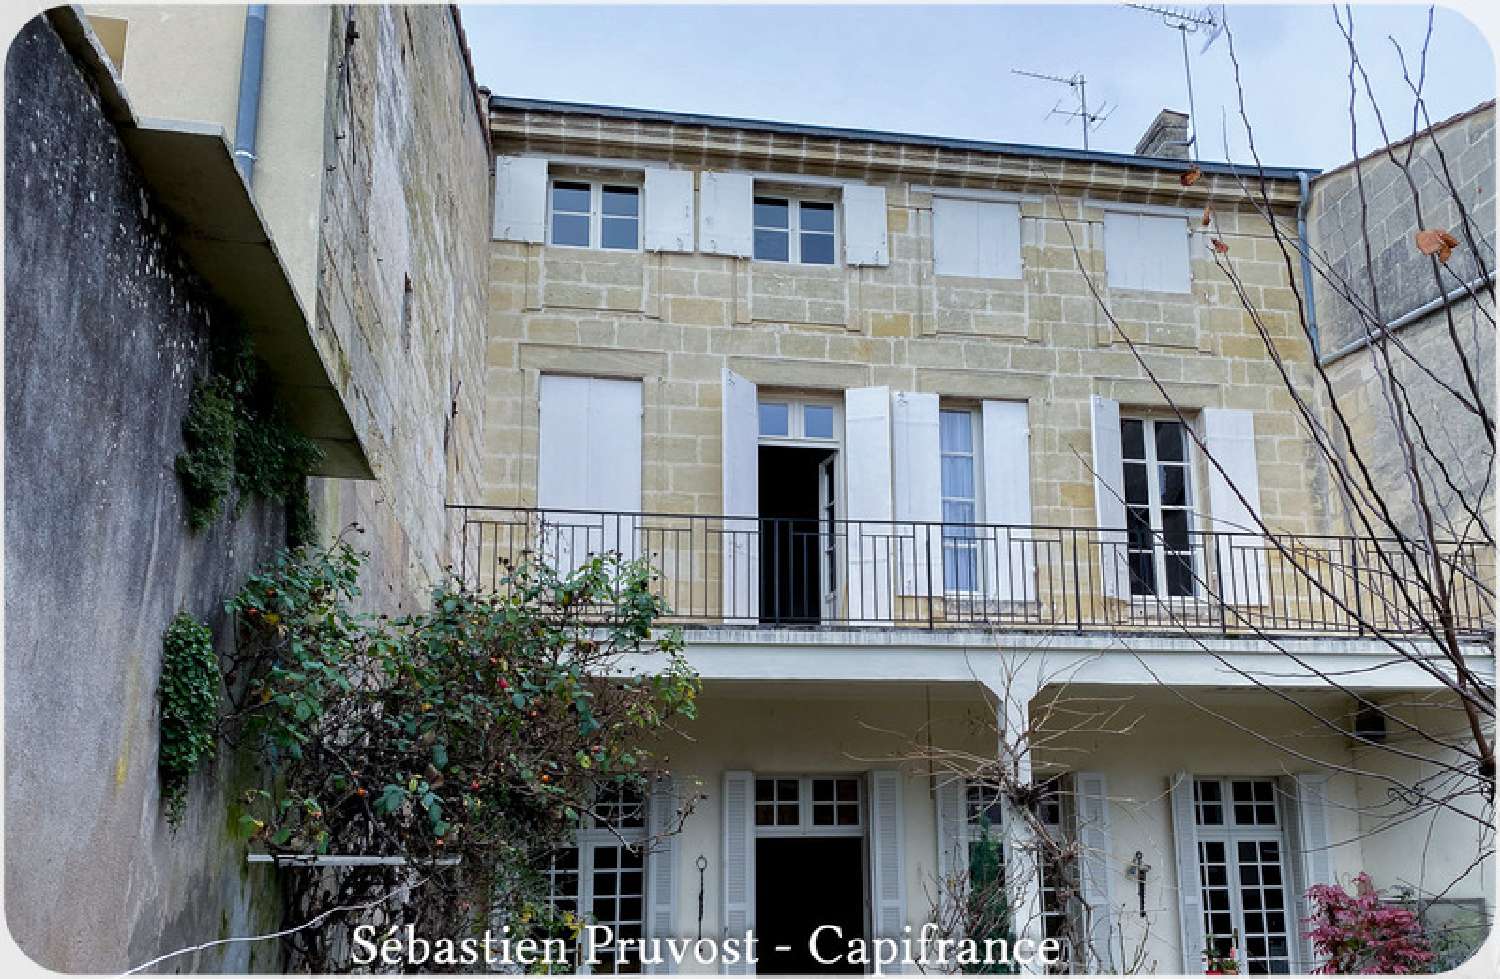  à vendre maison bourgeoise Libourne Gironde 2